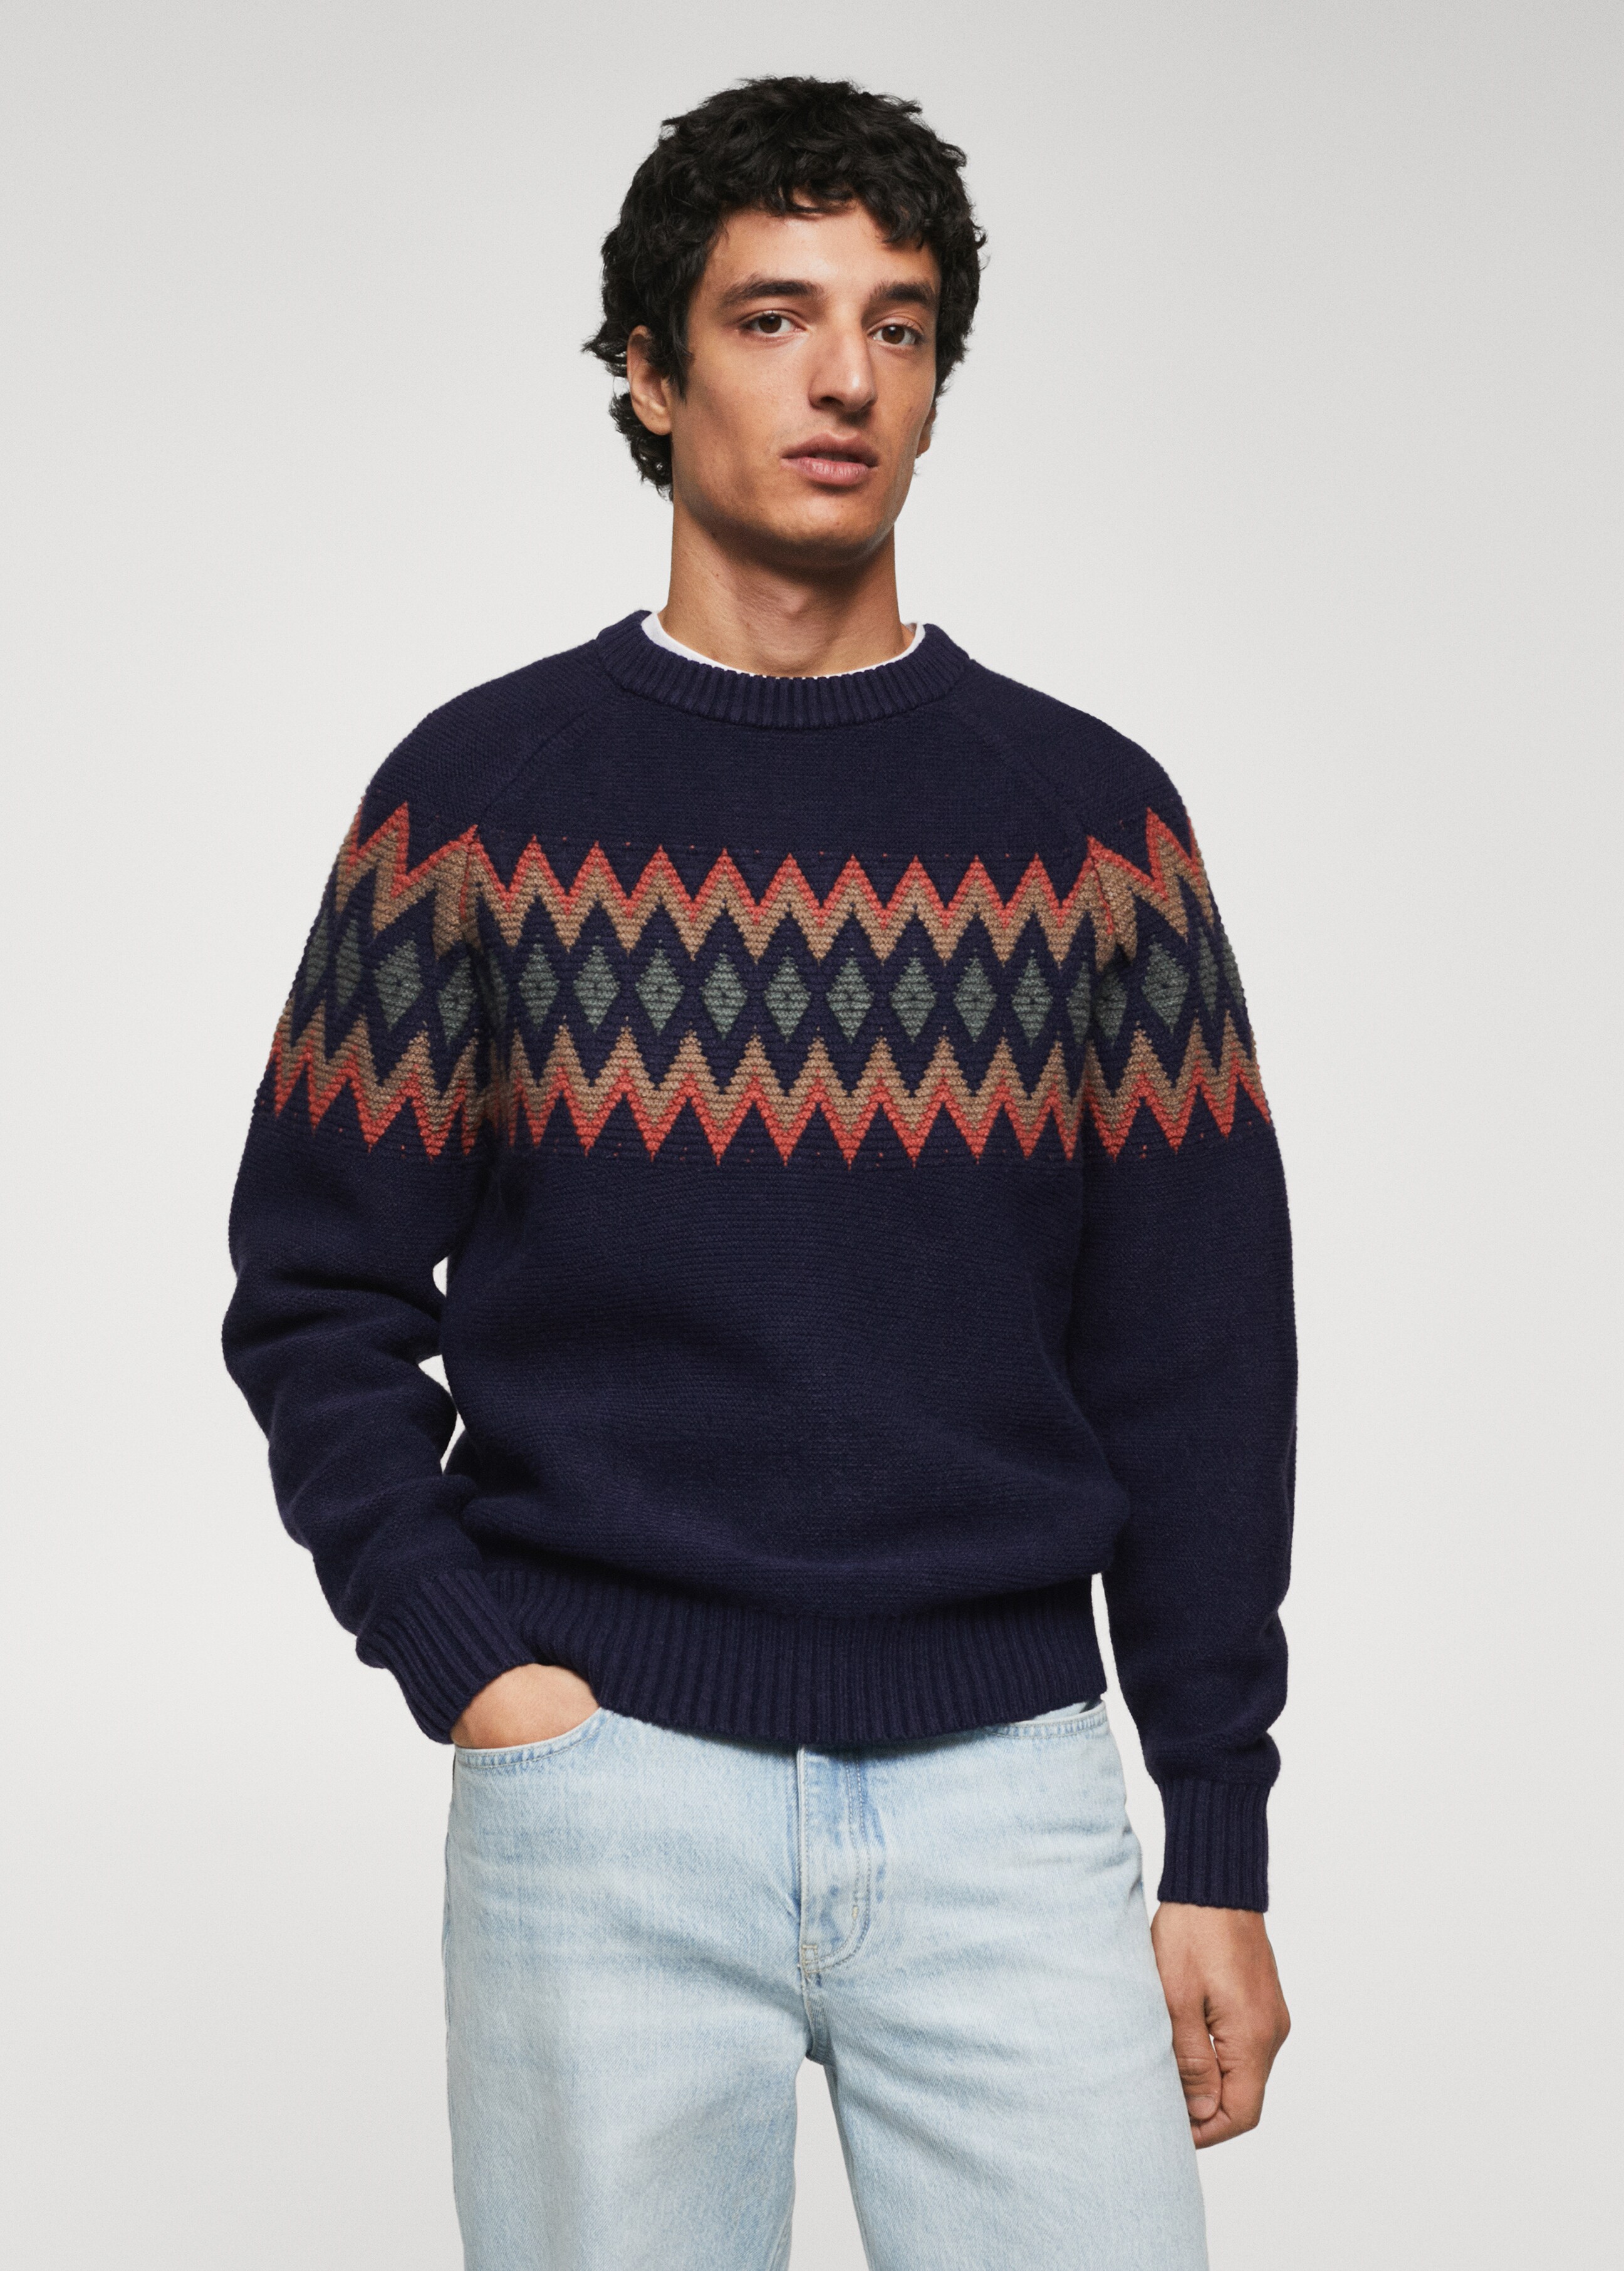 Geometric jacquard sweater - Medium plane